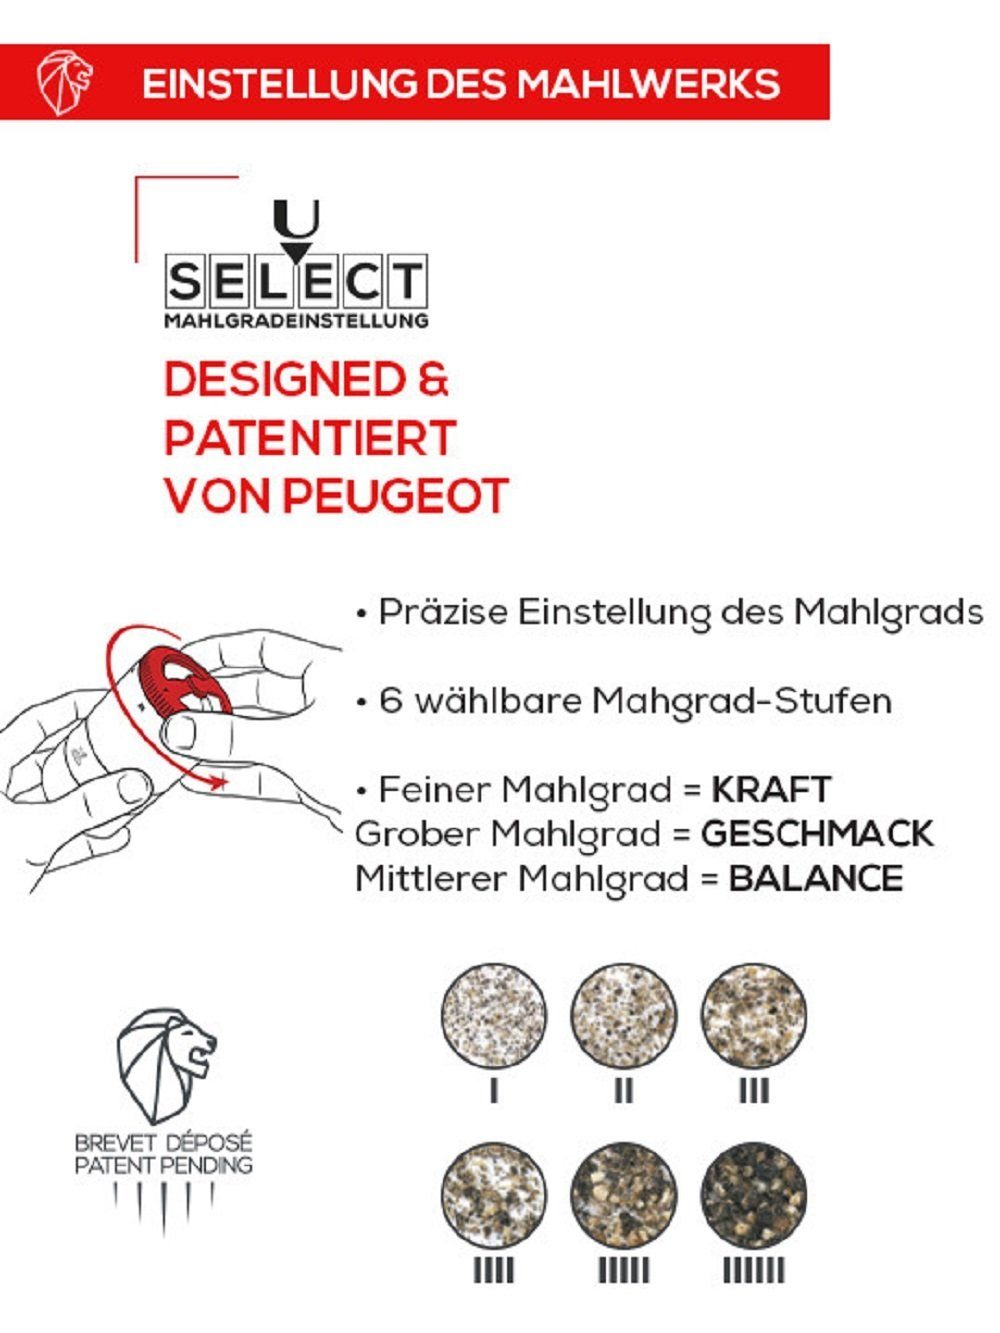 PEUGEOT Kräutermühle Peugeot, MAESTRO Pfefferbar Stück) graphit Geschenkbox, select, (1 u'